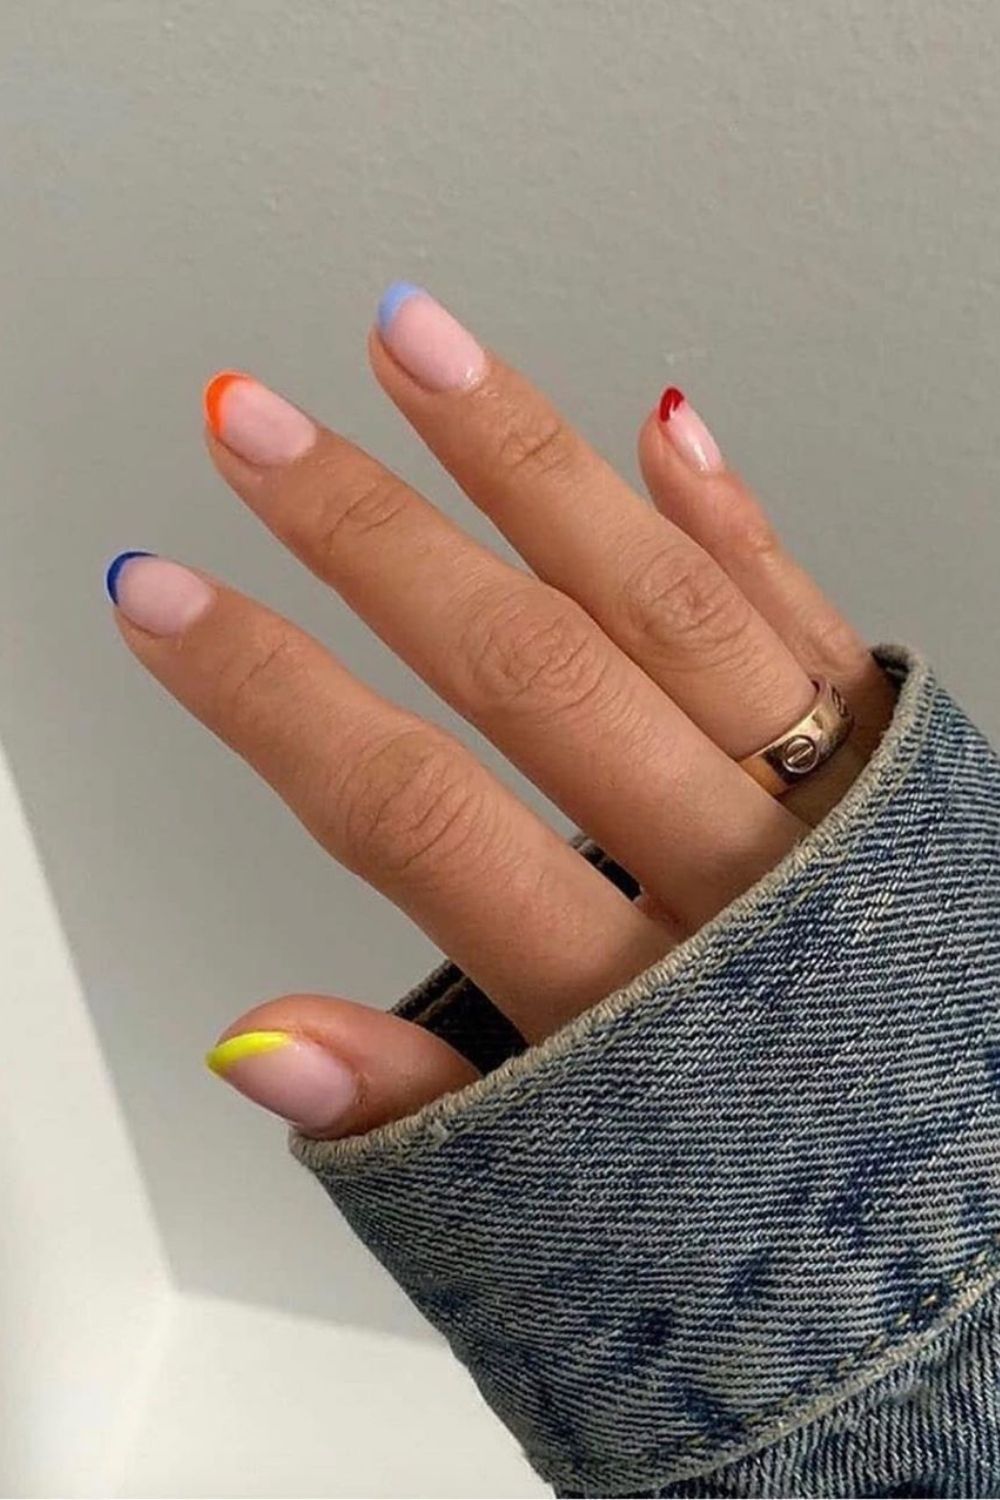 20 aesthetic nail art designs